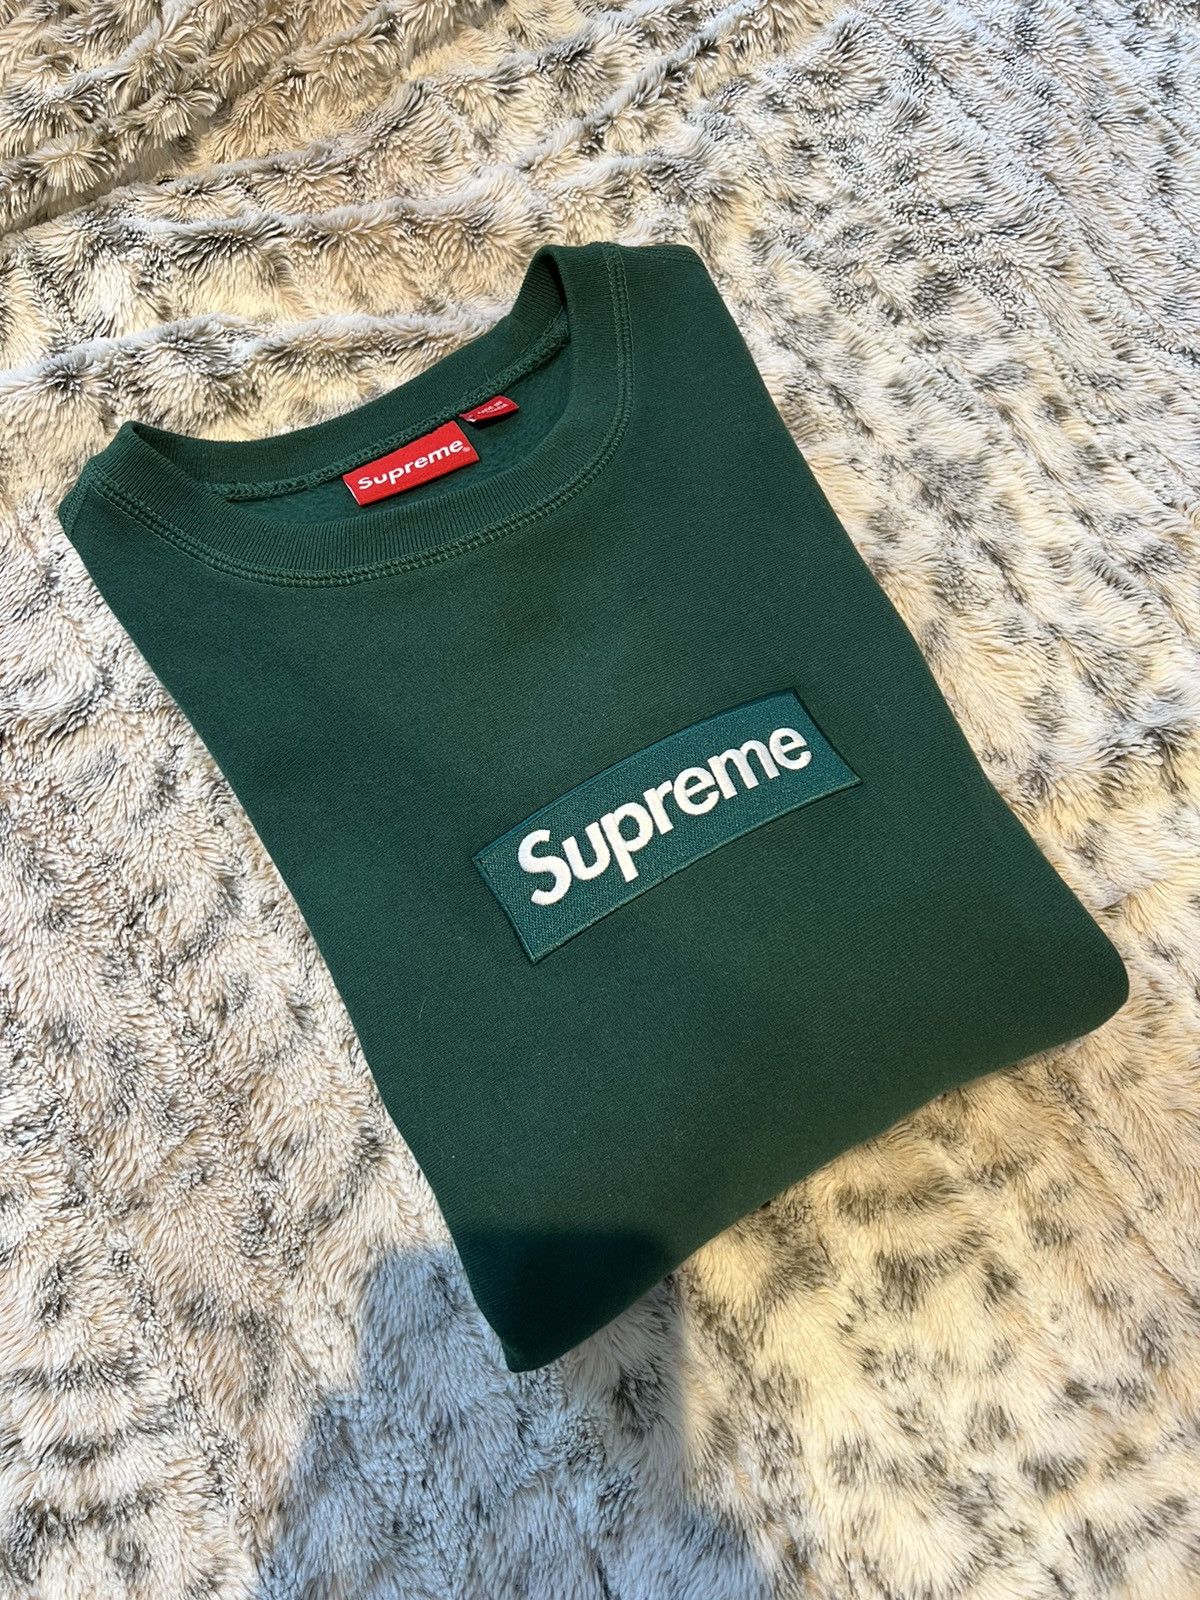 Supreme Supreme Pine Green Box Logo Sweatshirt (FW18) | Grailed